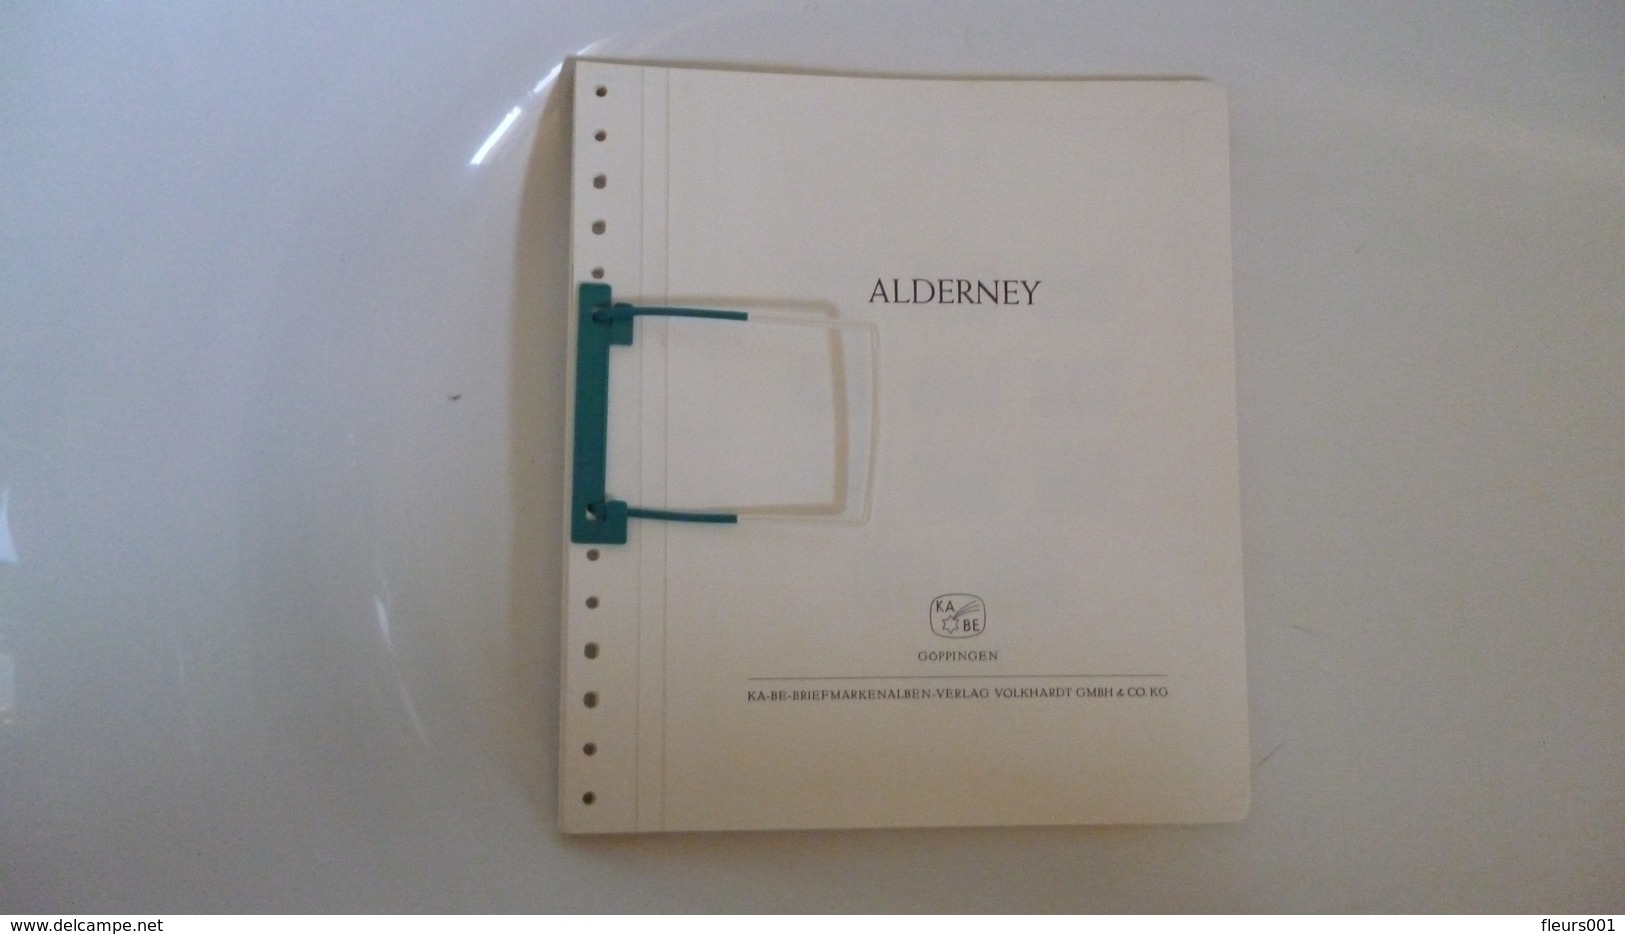 Alderney  (KaBe) 1983 -1999 - Pre-printed Pages